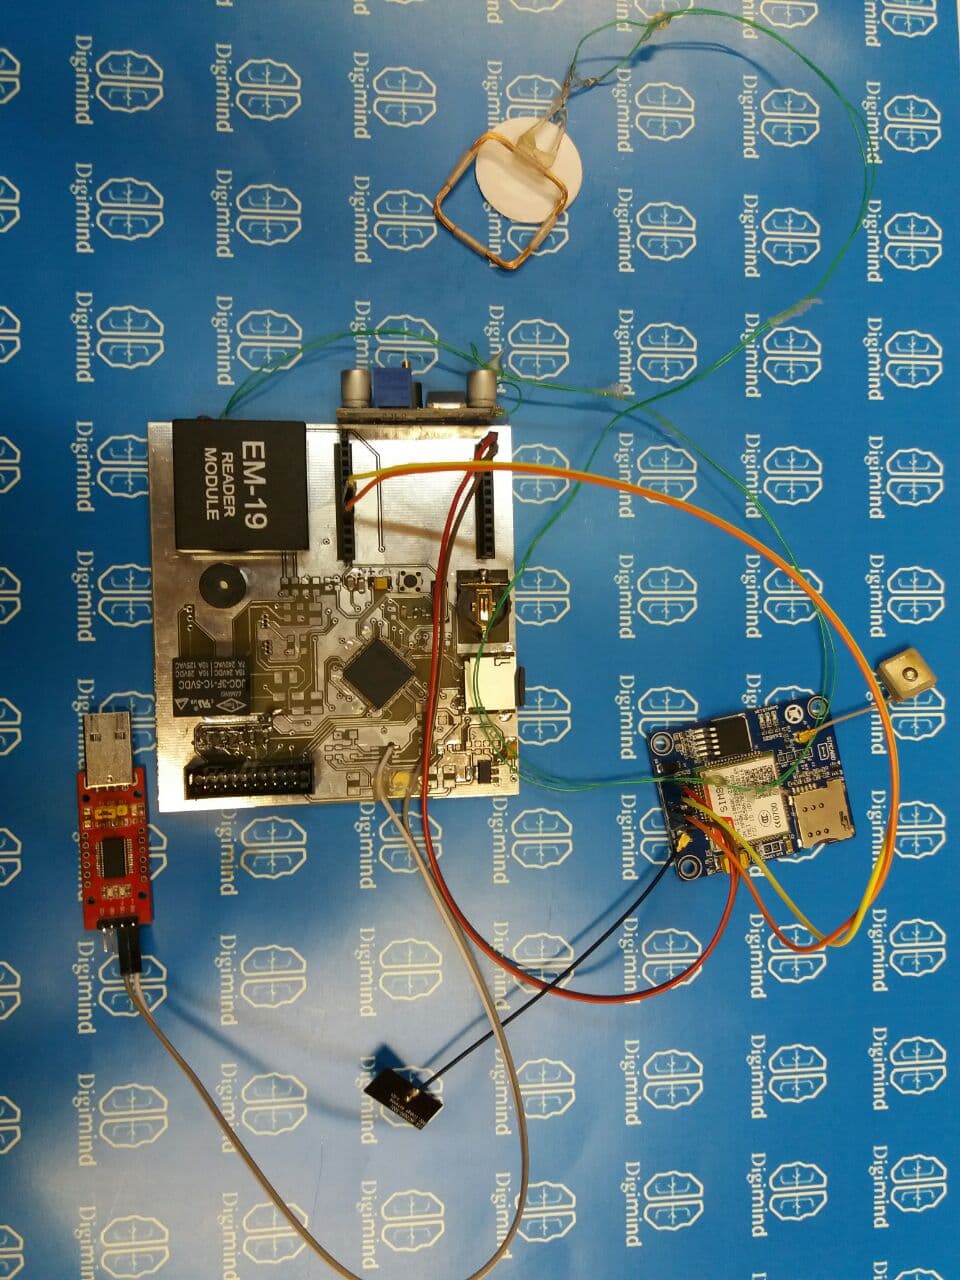 ریدر RFID با قابلیت ارسال موقعیت gps -مرکز ذهن دیجیتال